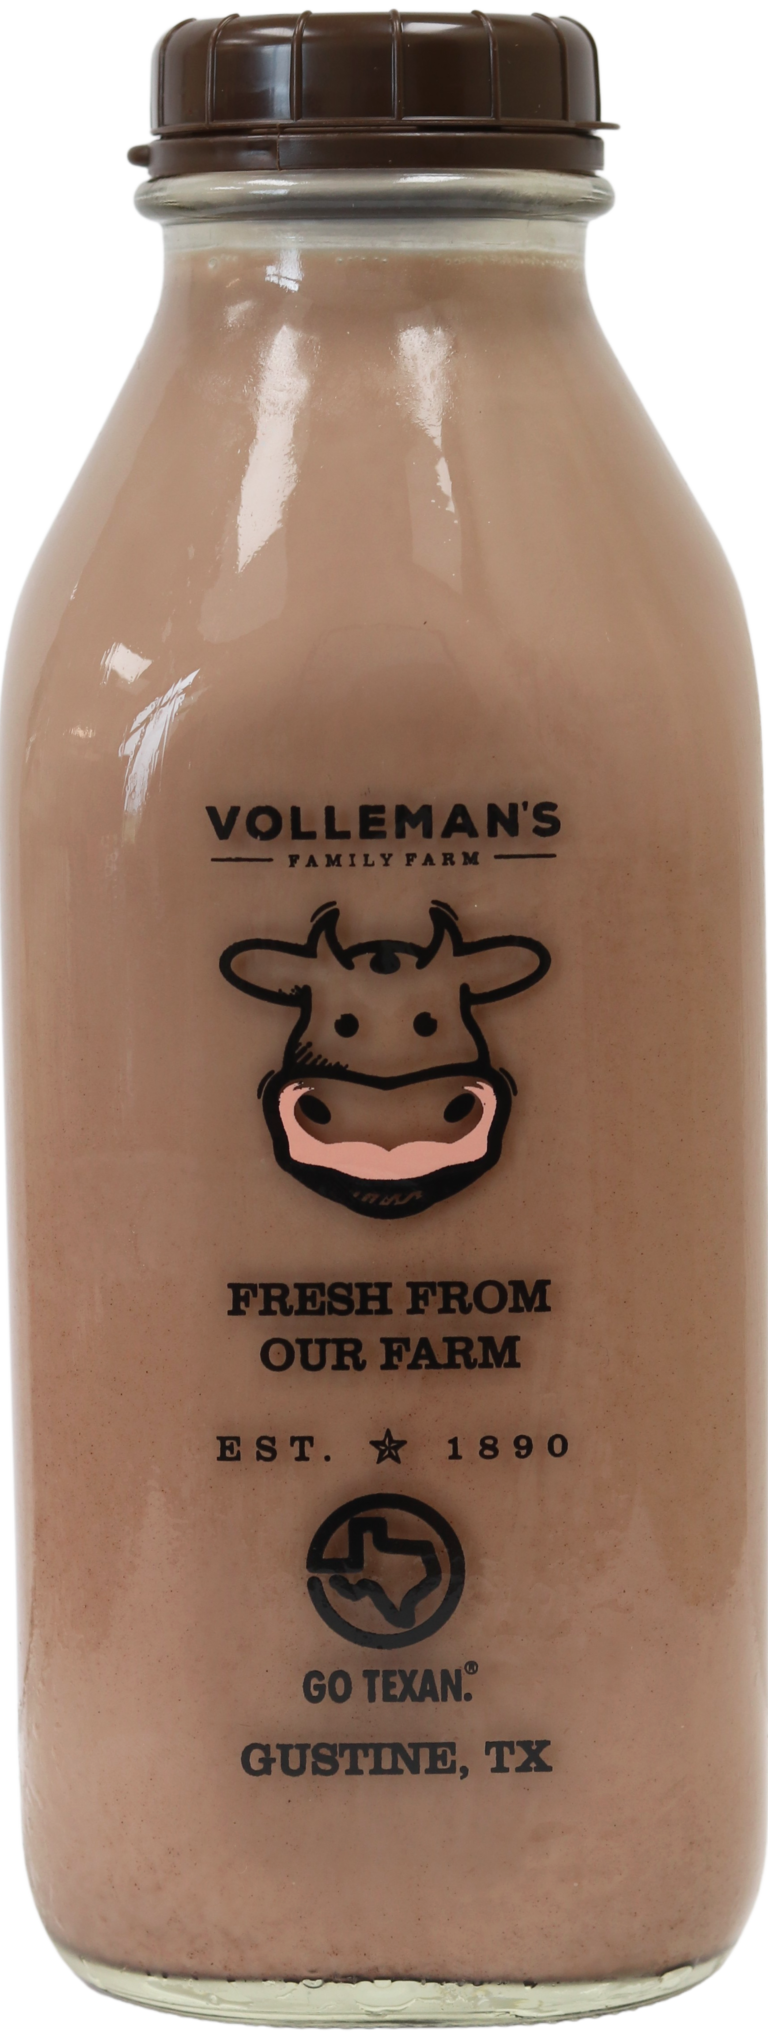 Volleman's chocolate milk